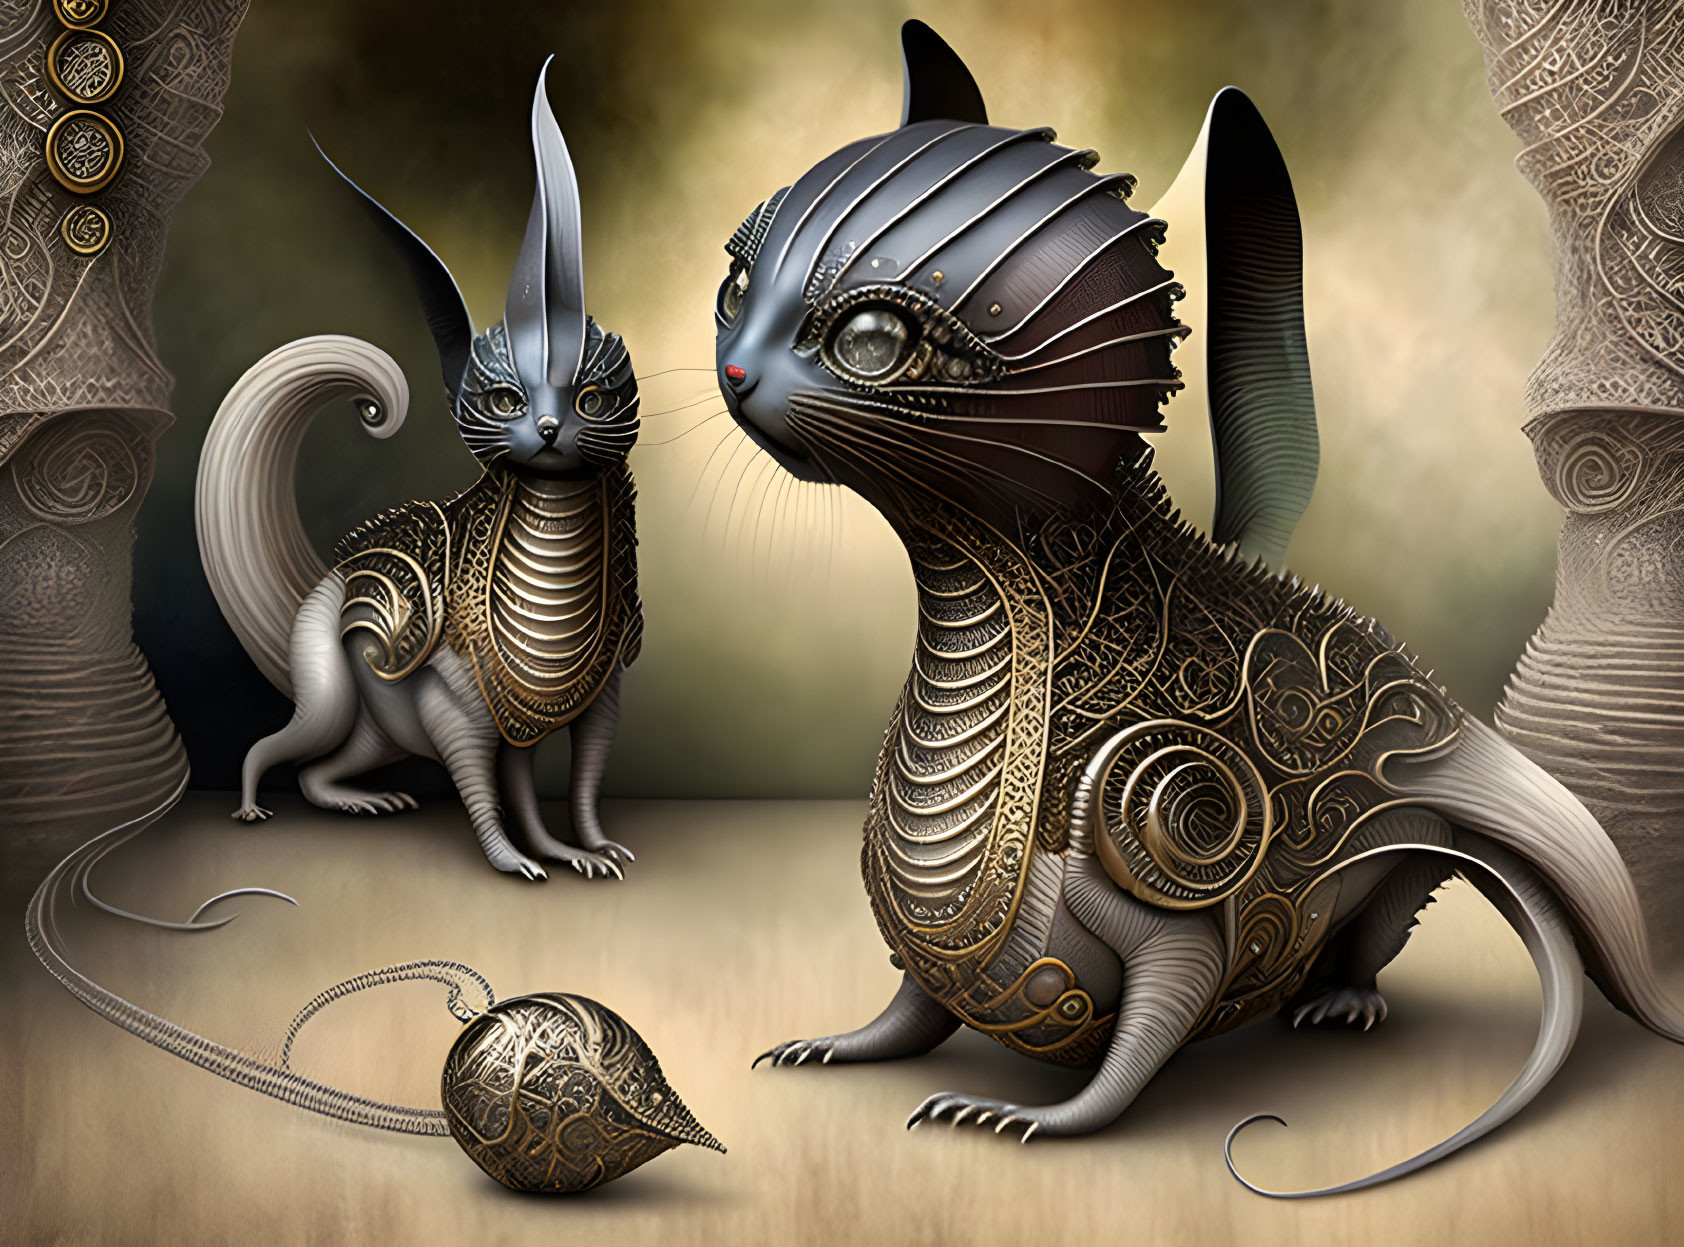 Intricate metallic designs of fantastical mechanical cats